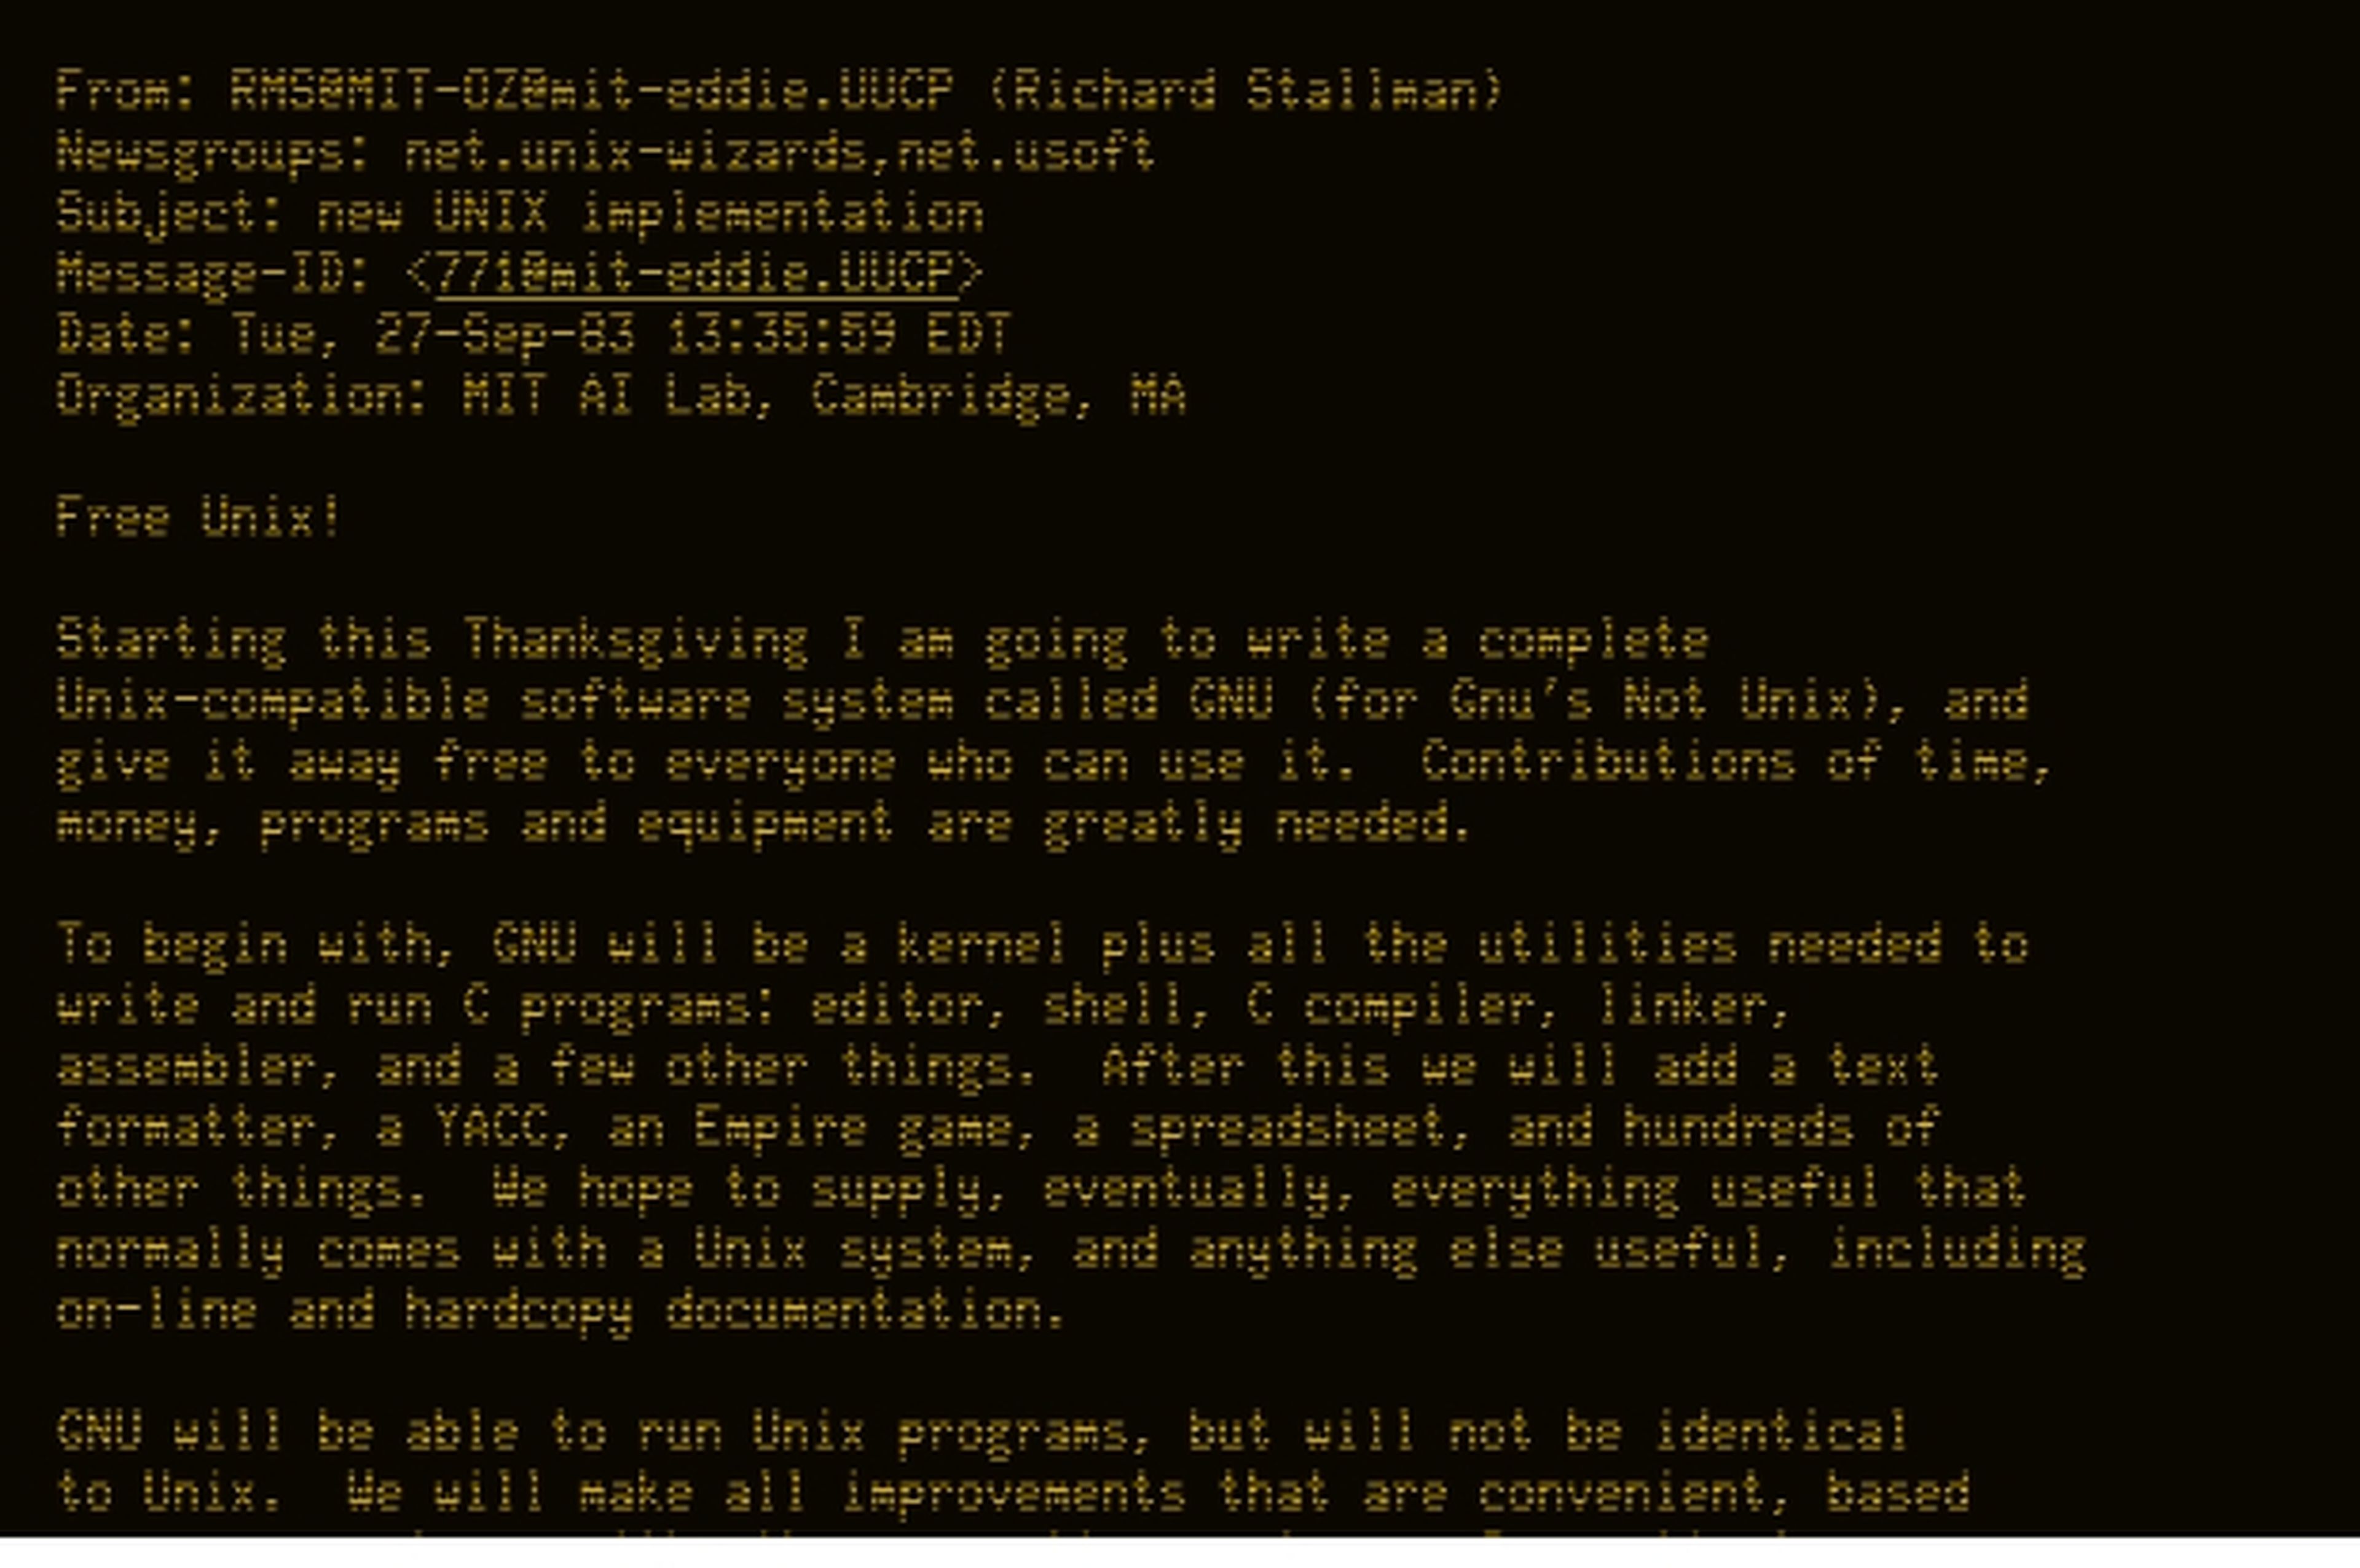 Email Richard Stallman